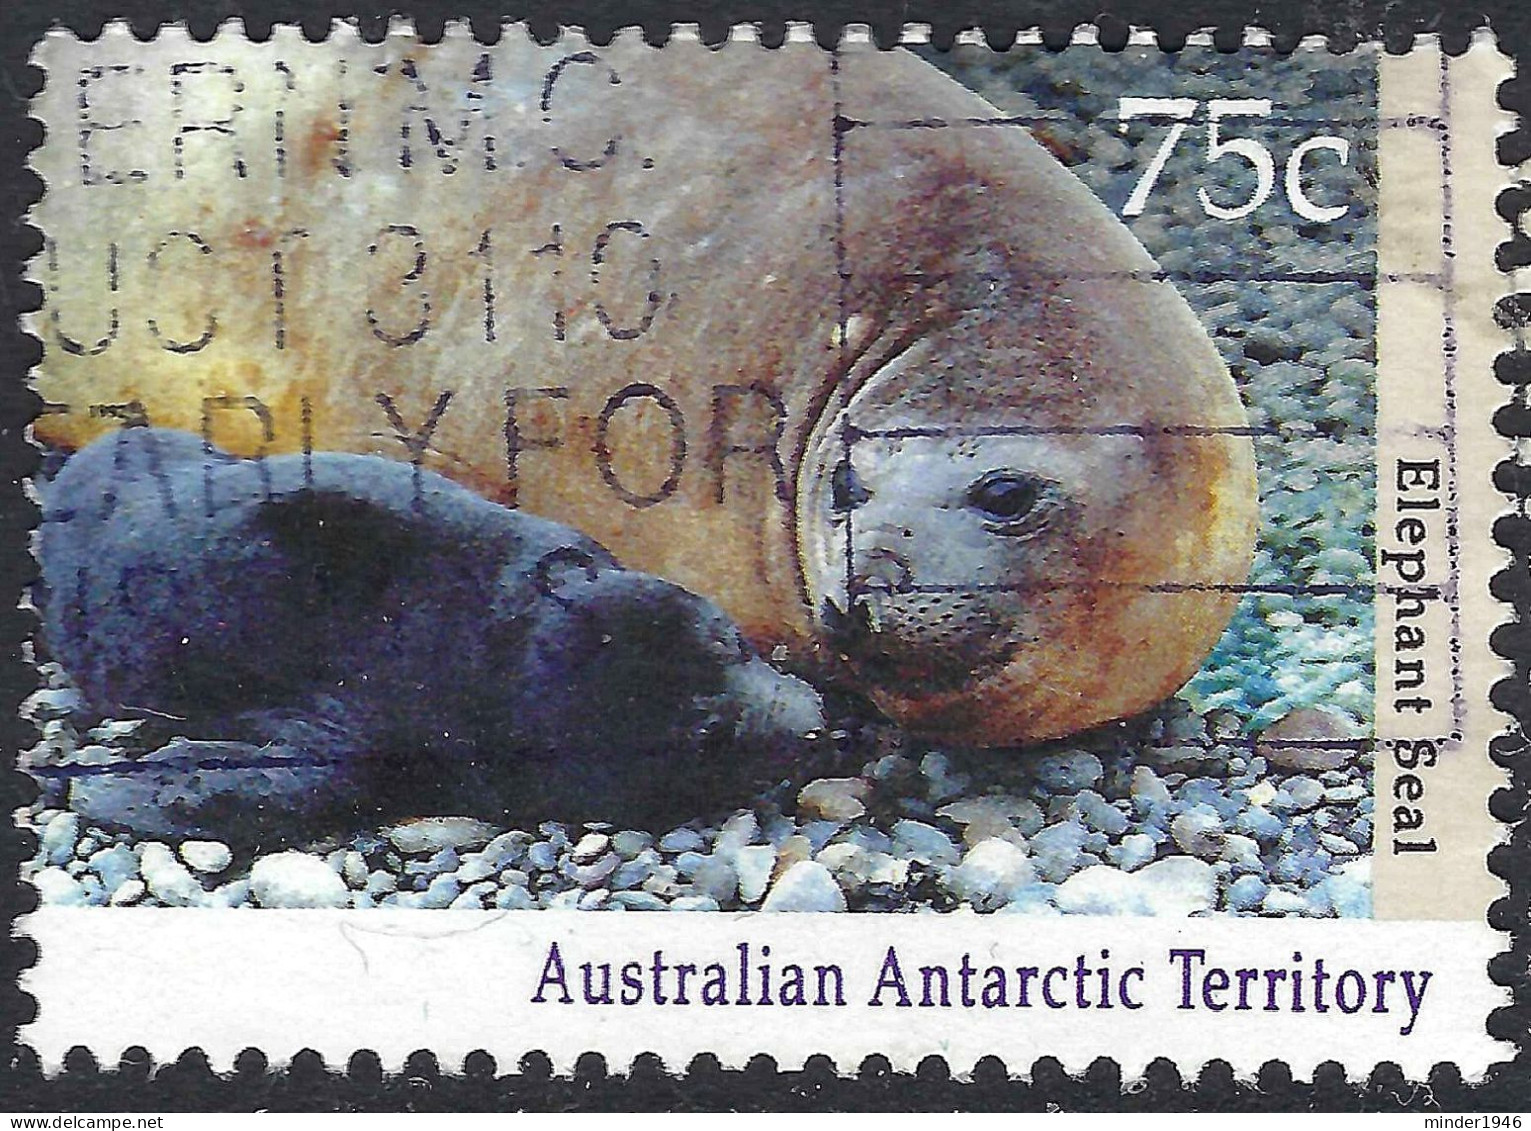 AUSTRALIAN ANTARCTIC TERRITORY (AAT) 1992 QEII 75c Multicoloured, Wildlife-Elephant Seal SG91 FU - Gebruikt